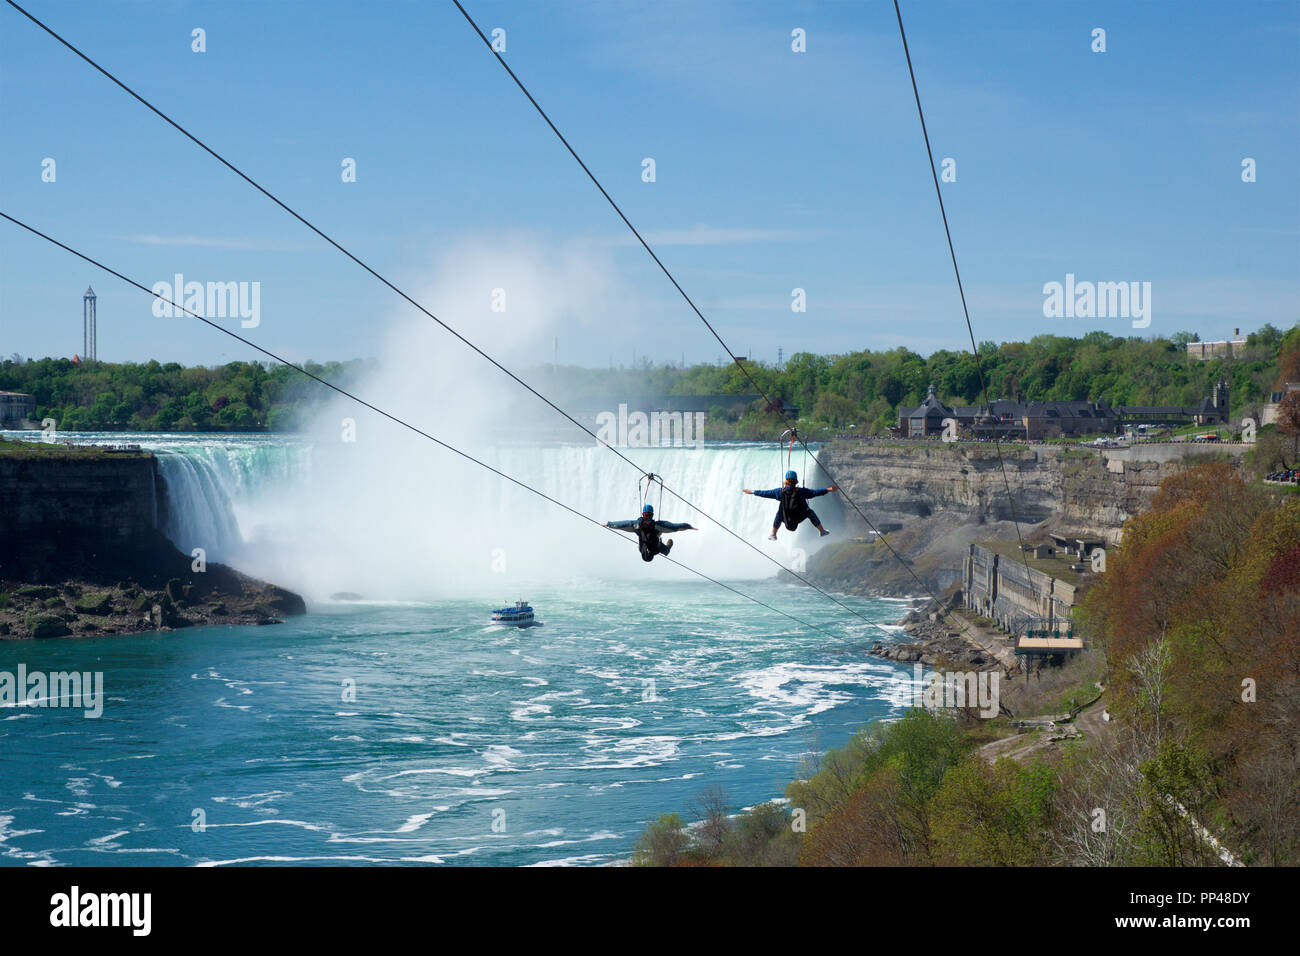 NIAGARA FALLS, ONTARIO, CANADA - 21 MAI 2018 : Deux personnes prenant en tyrolienne à Niagara Falls en été avec des chutes Niagara en arrière-plan Banque D'Images